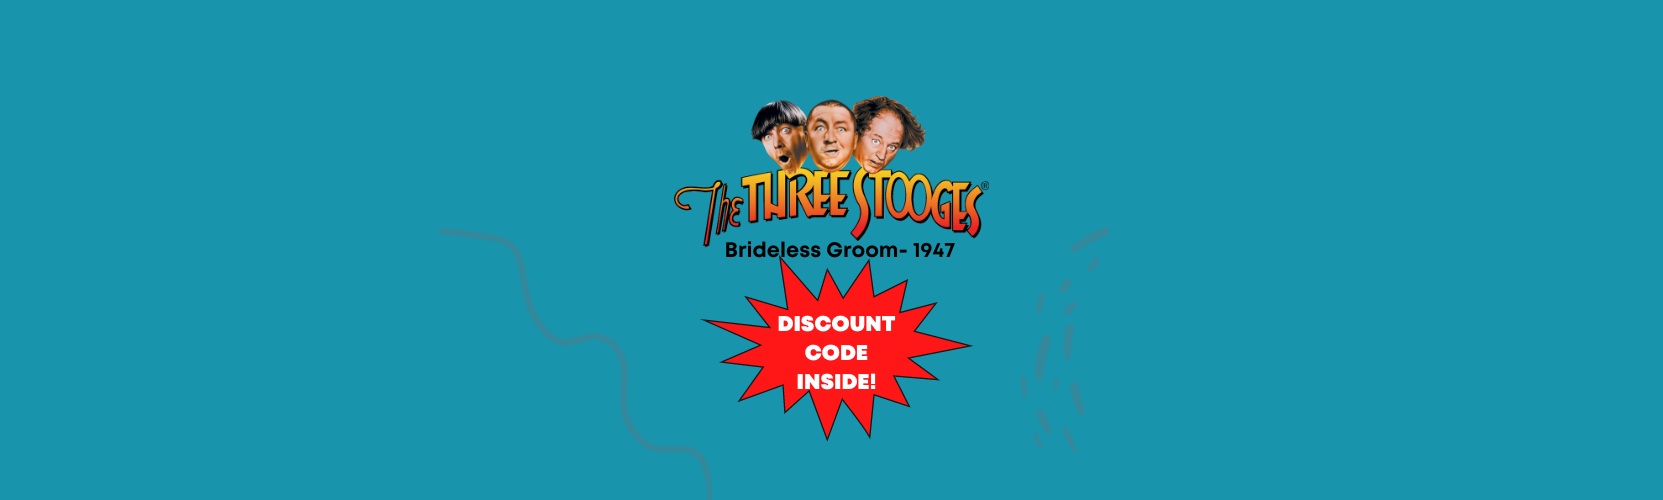 ShopKnuckleheads: Brideless Groom- 1947 & Discount Code Inside!